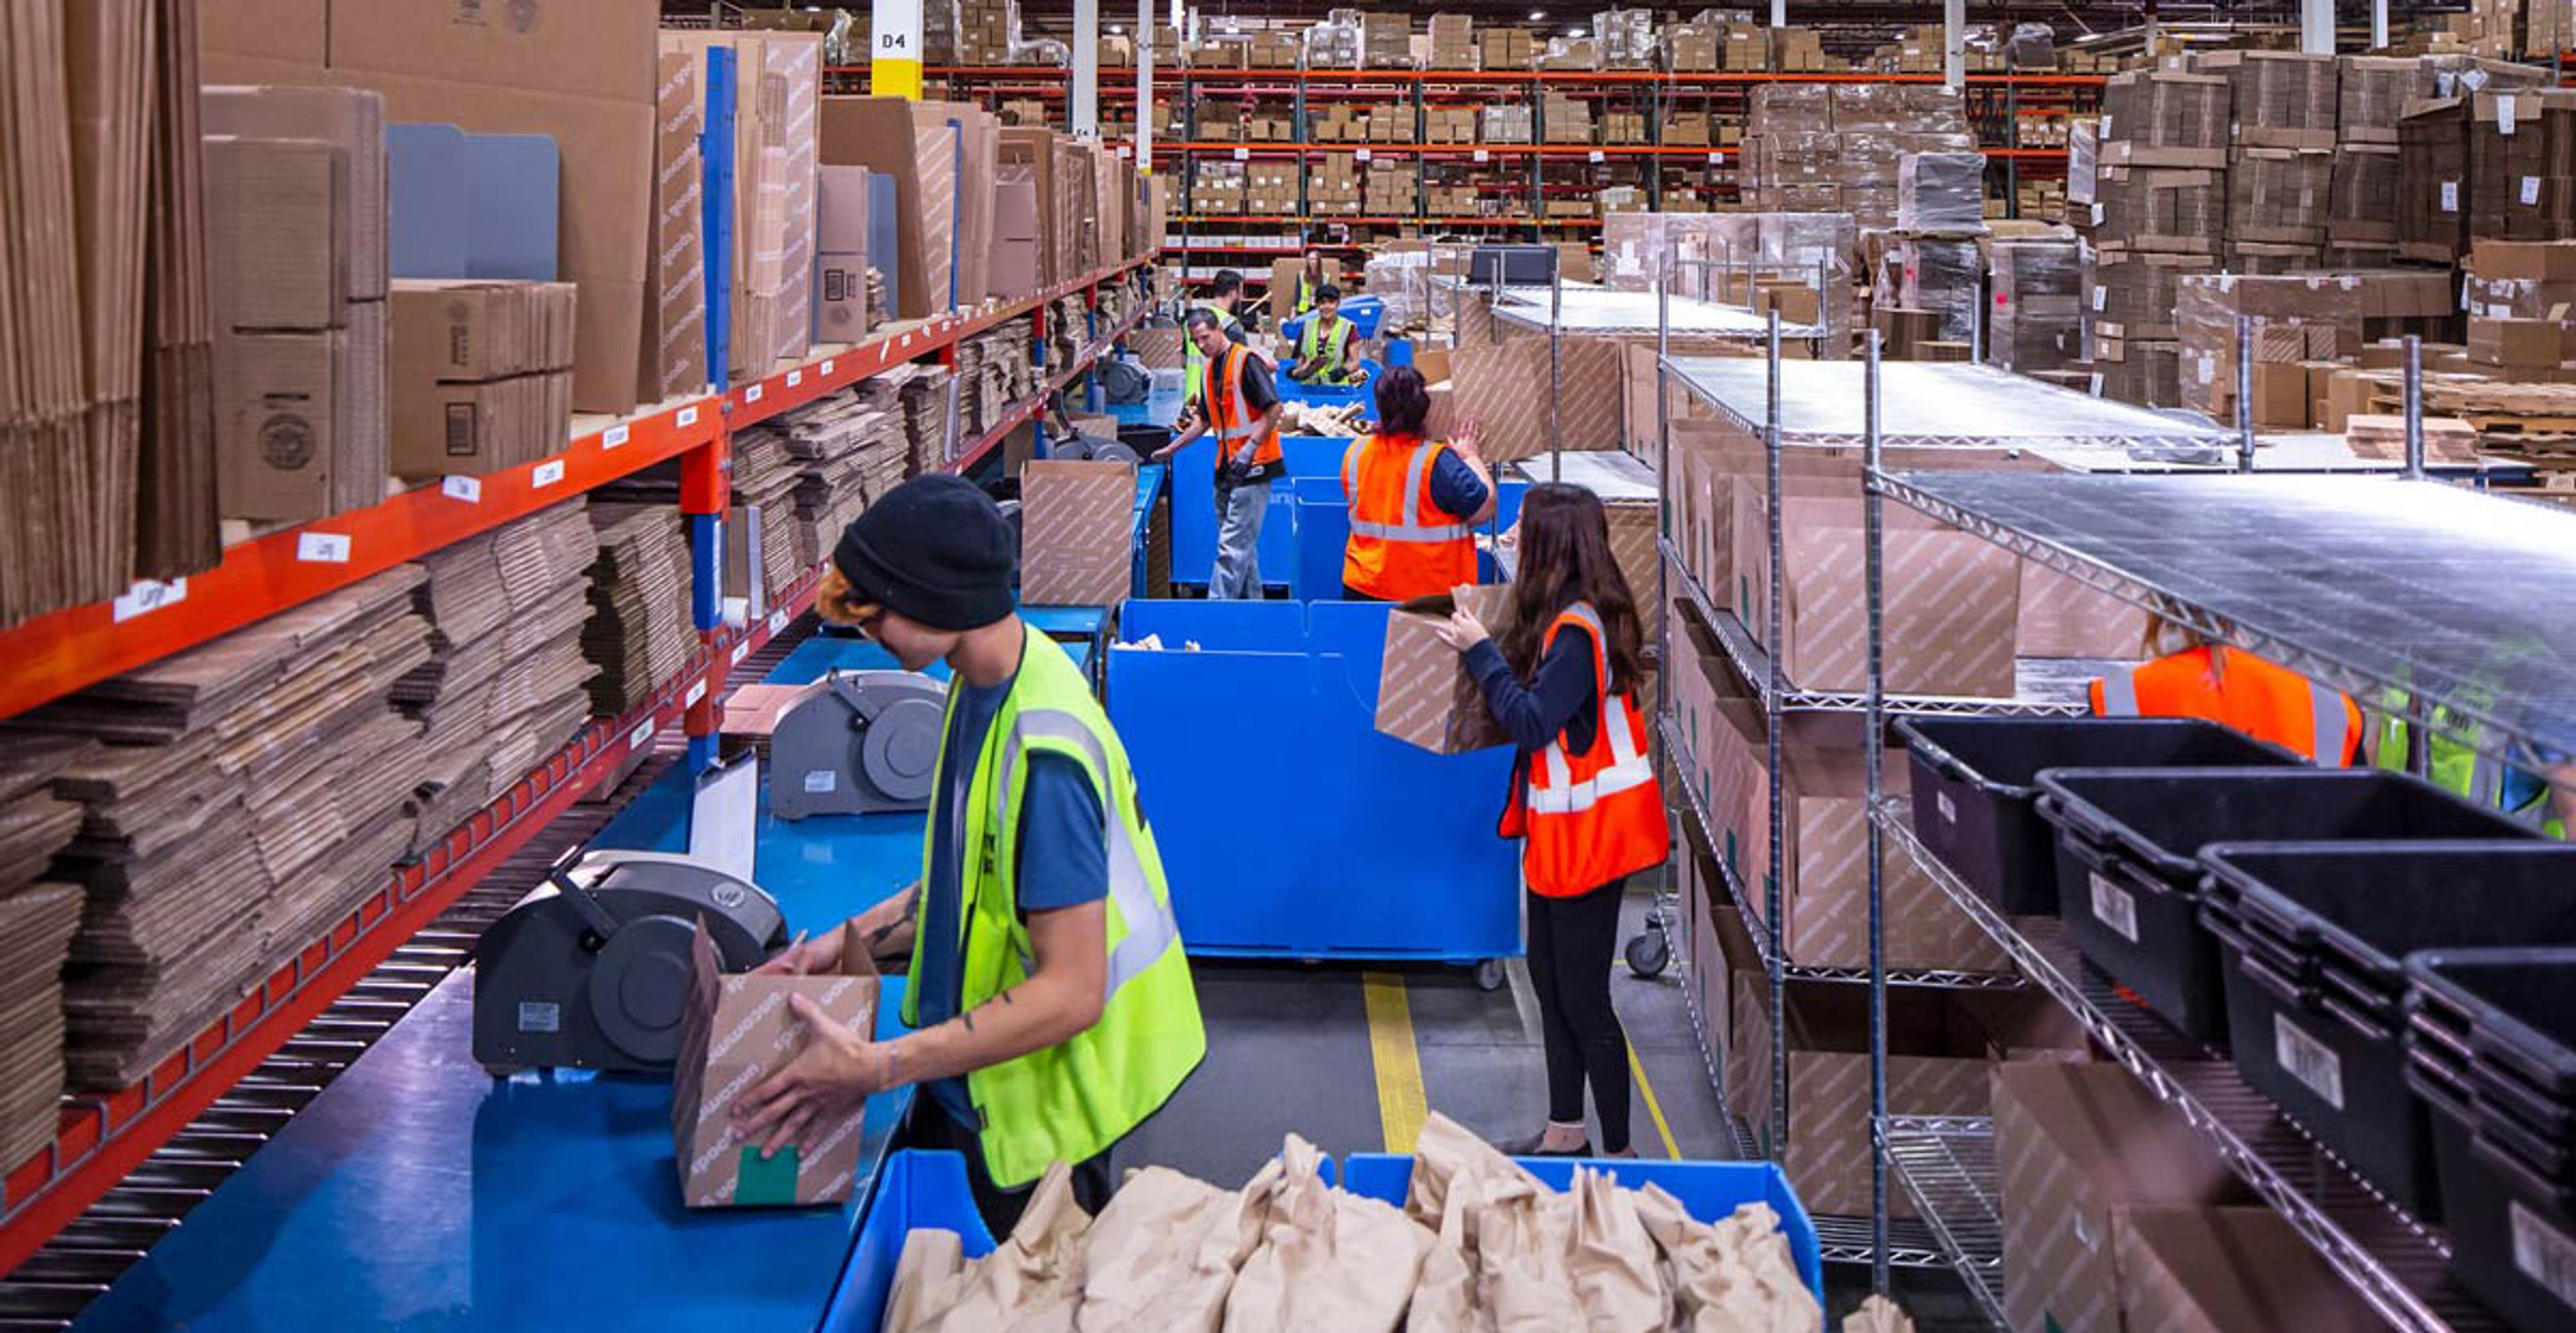 employees in warehouse planning for peak season